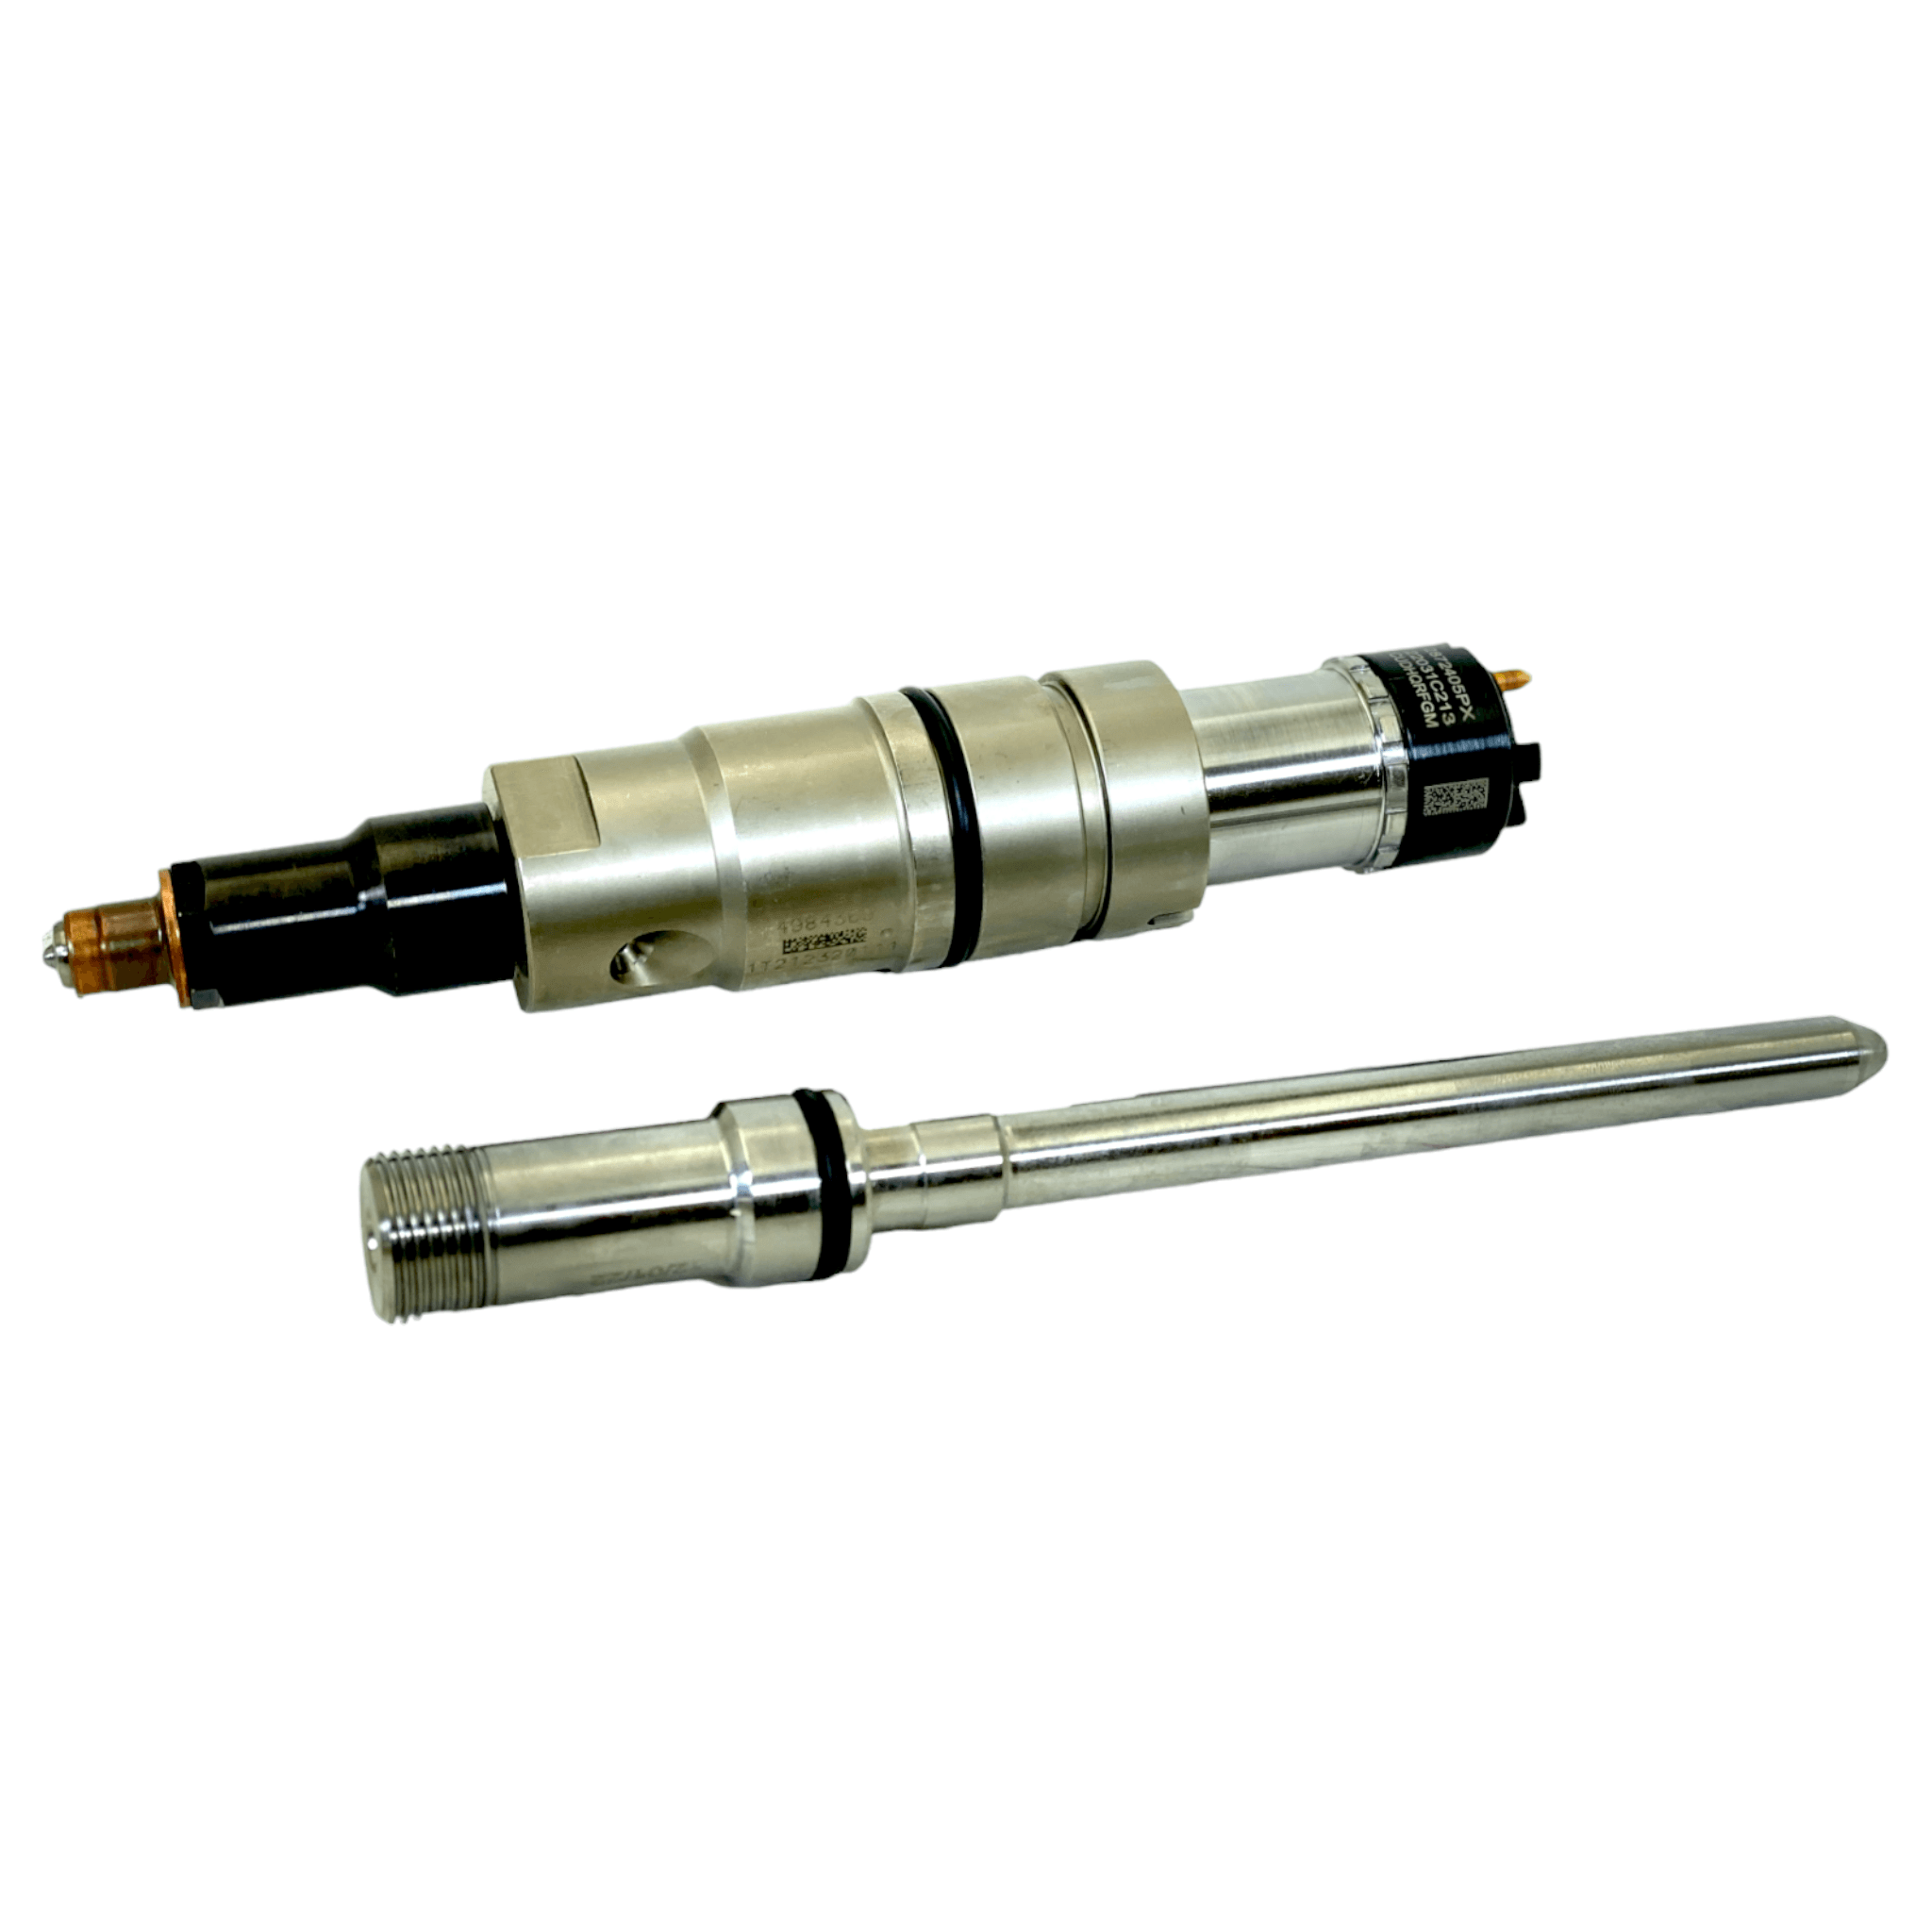 5579417Px Oem Cummins Fuel Injector For Xpi Fuel Systems On Epa10 Automotive 15L Isx/Qsx - ADVANCED TRUCK PARTS